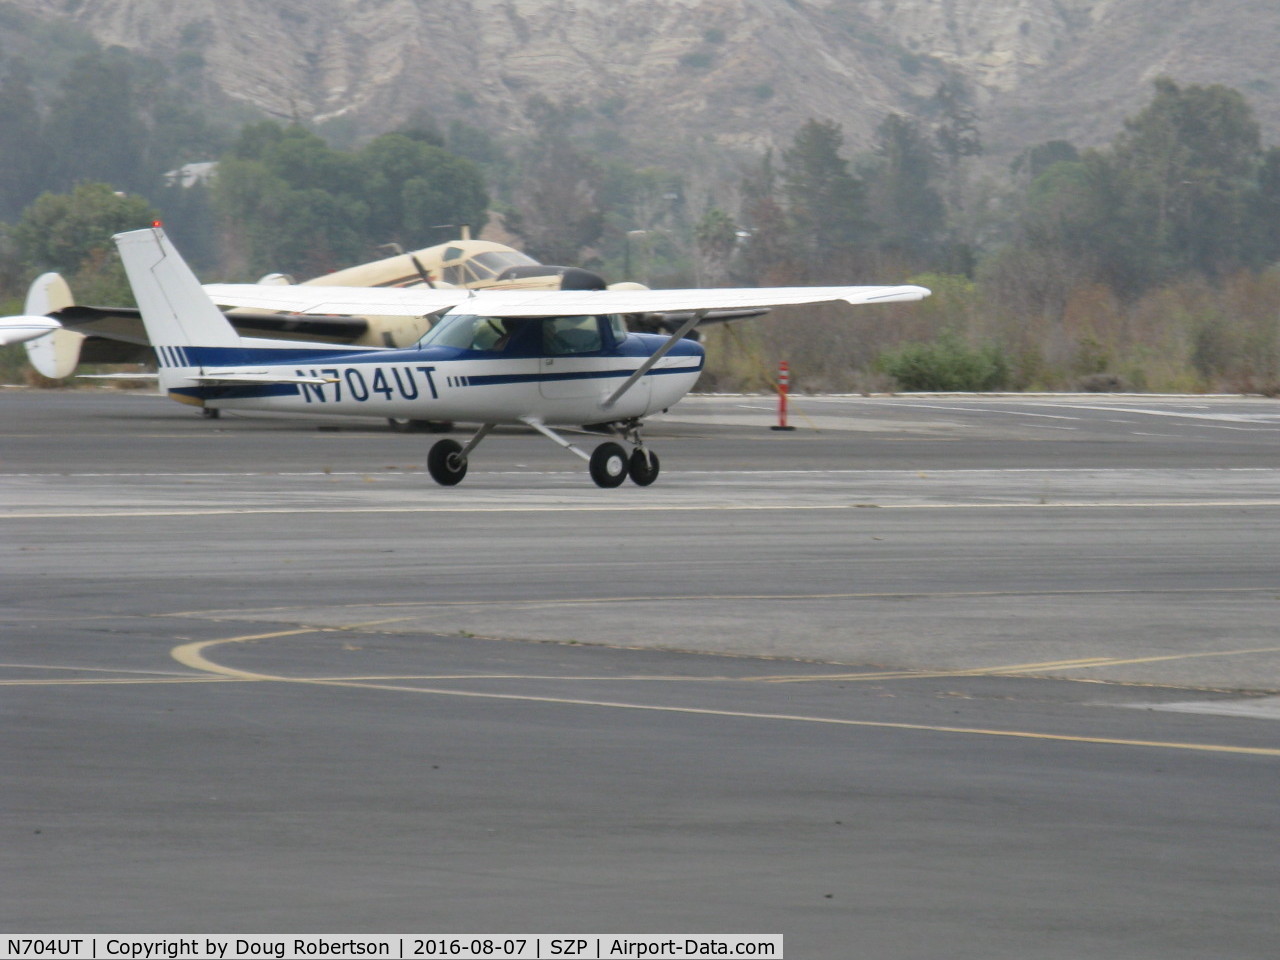 N704UT, 1976 Cessna 150M C/N 15078891, 1976 Cessna 150M, Continental O-200 100 Hp, foggy but flyable, takeoff roll Rwy 22